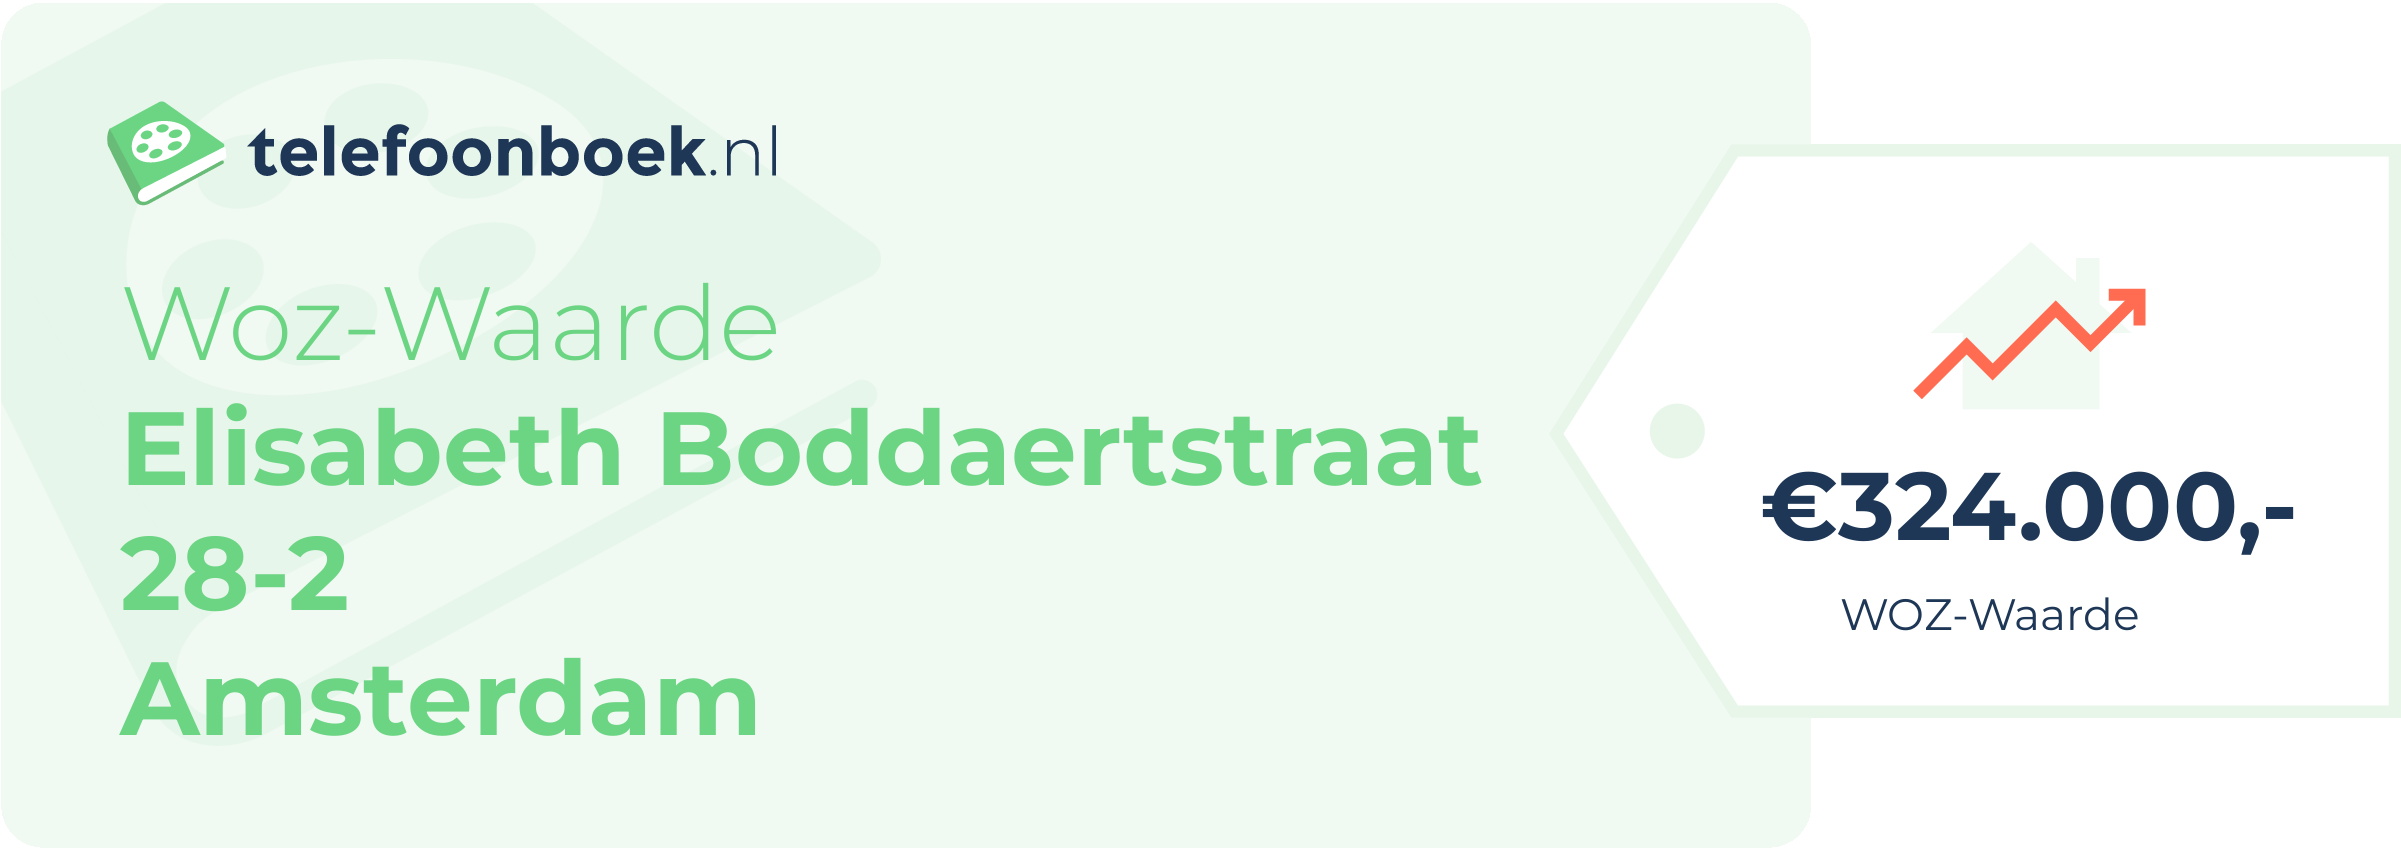 WOZ-waarde Elisabeth Boddaertstraat 28-2 Amsterdam